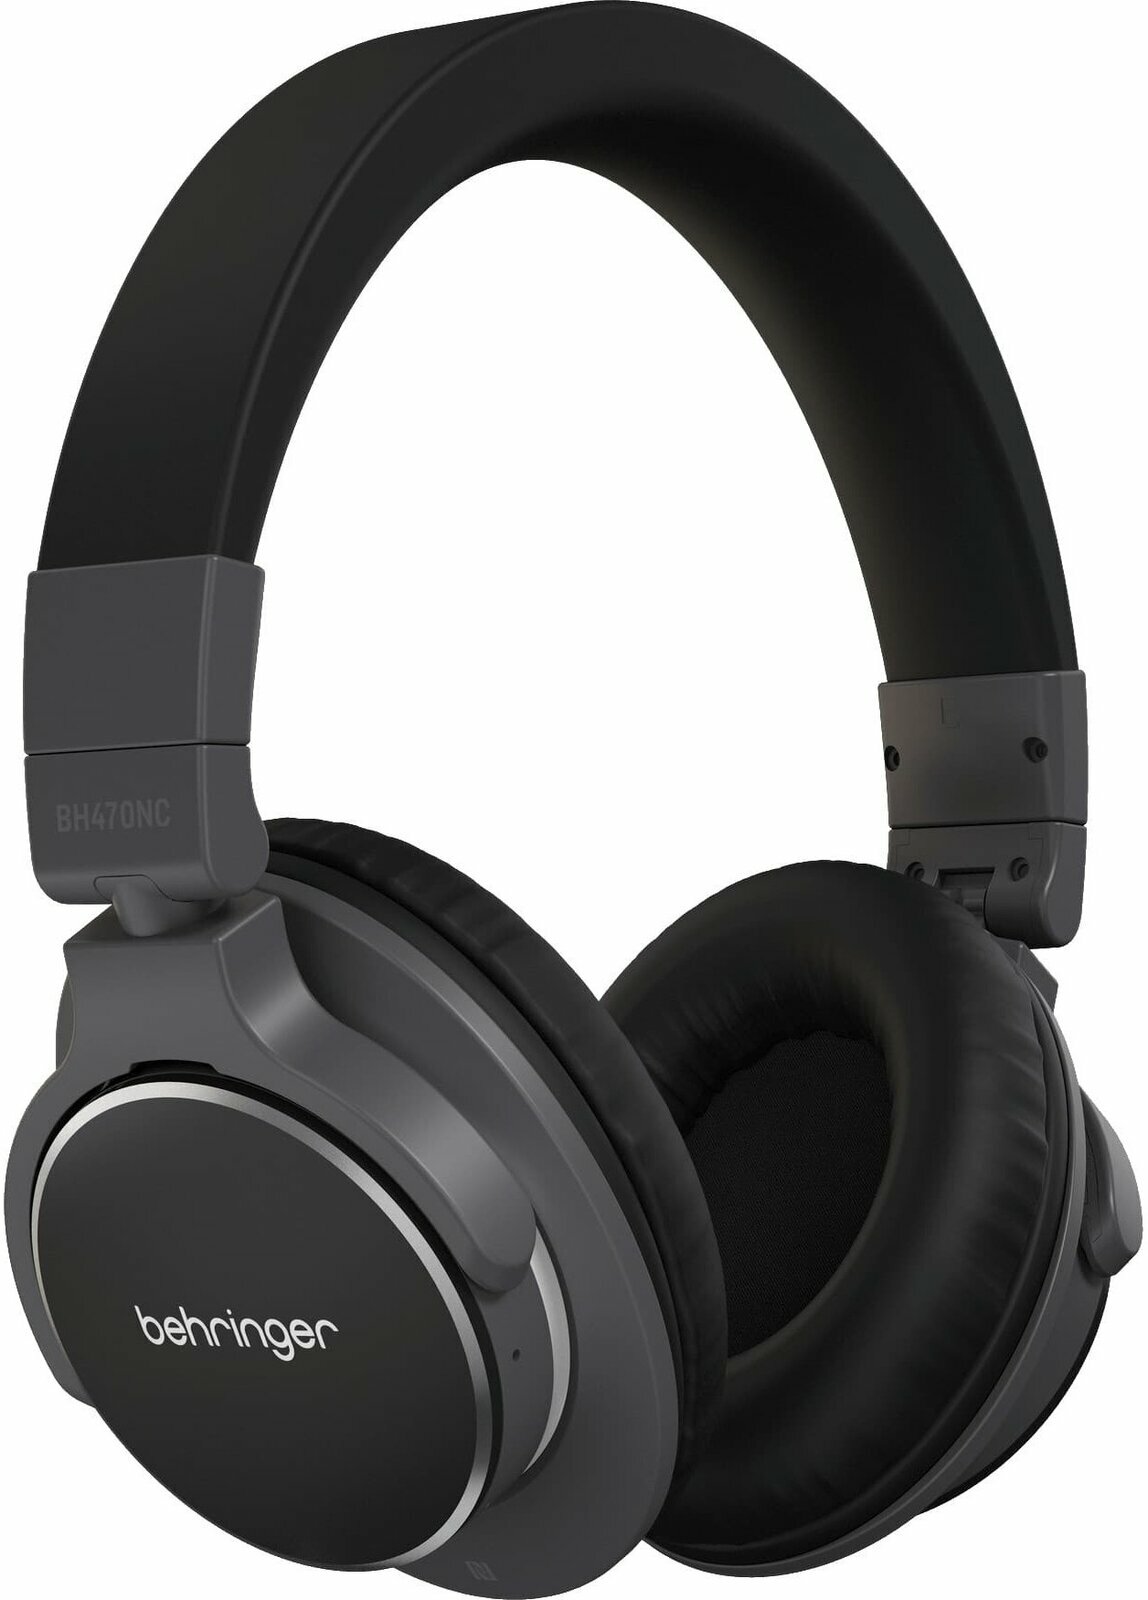 Drahtlose On-Ear-Kopfhörer Behringer BH470NC Black